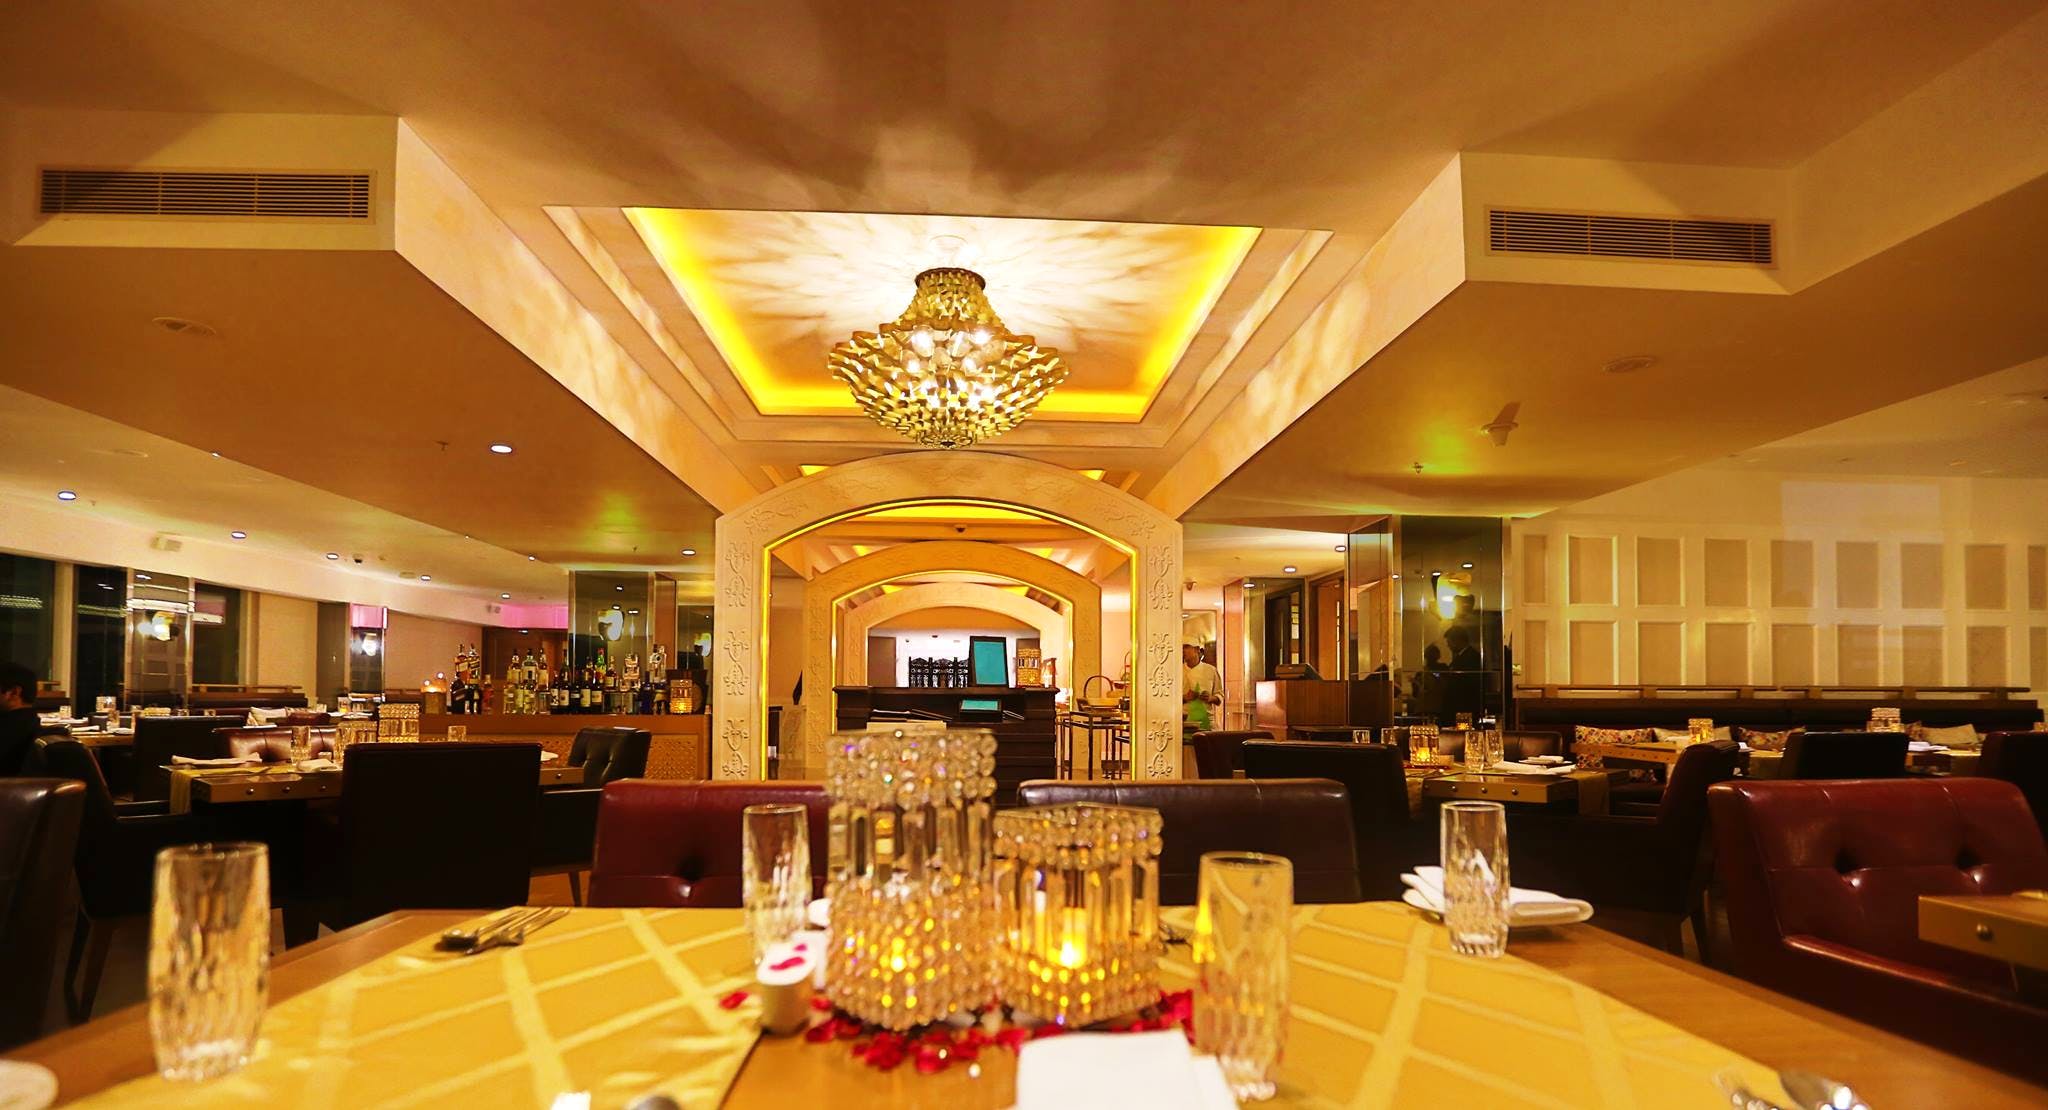 Restaurant,Function hall,Building,Ceiling,Interior design,Room,Hotel,Banquet,Lobby,Resort